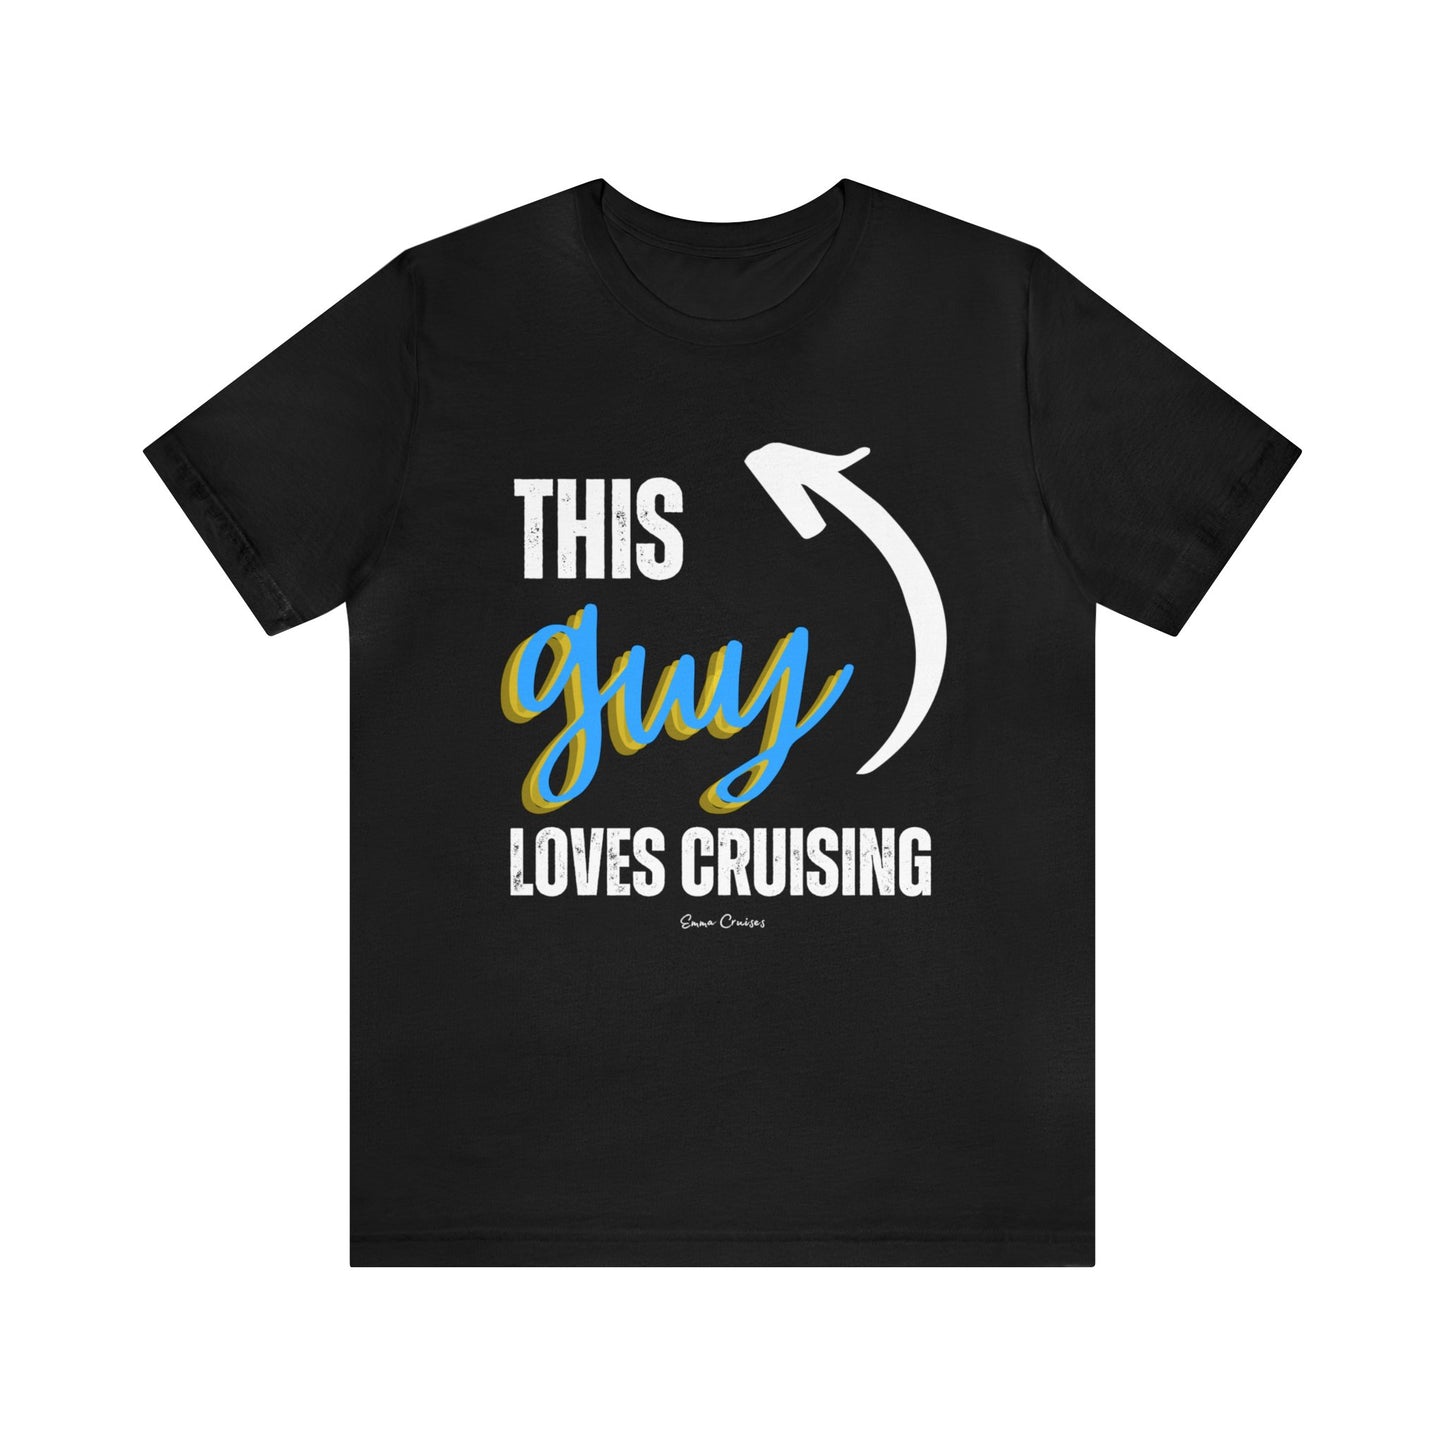 This Guy Loves Cruising - UNISEX T-Shirt